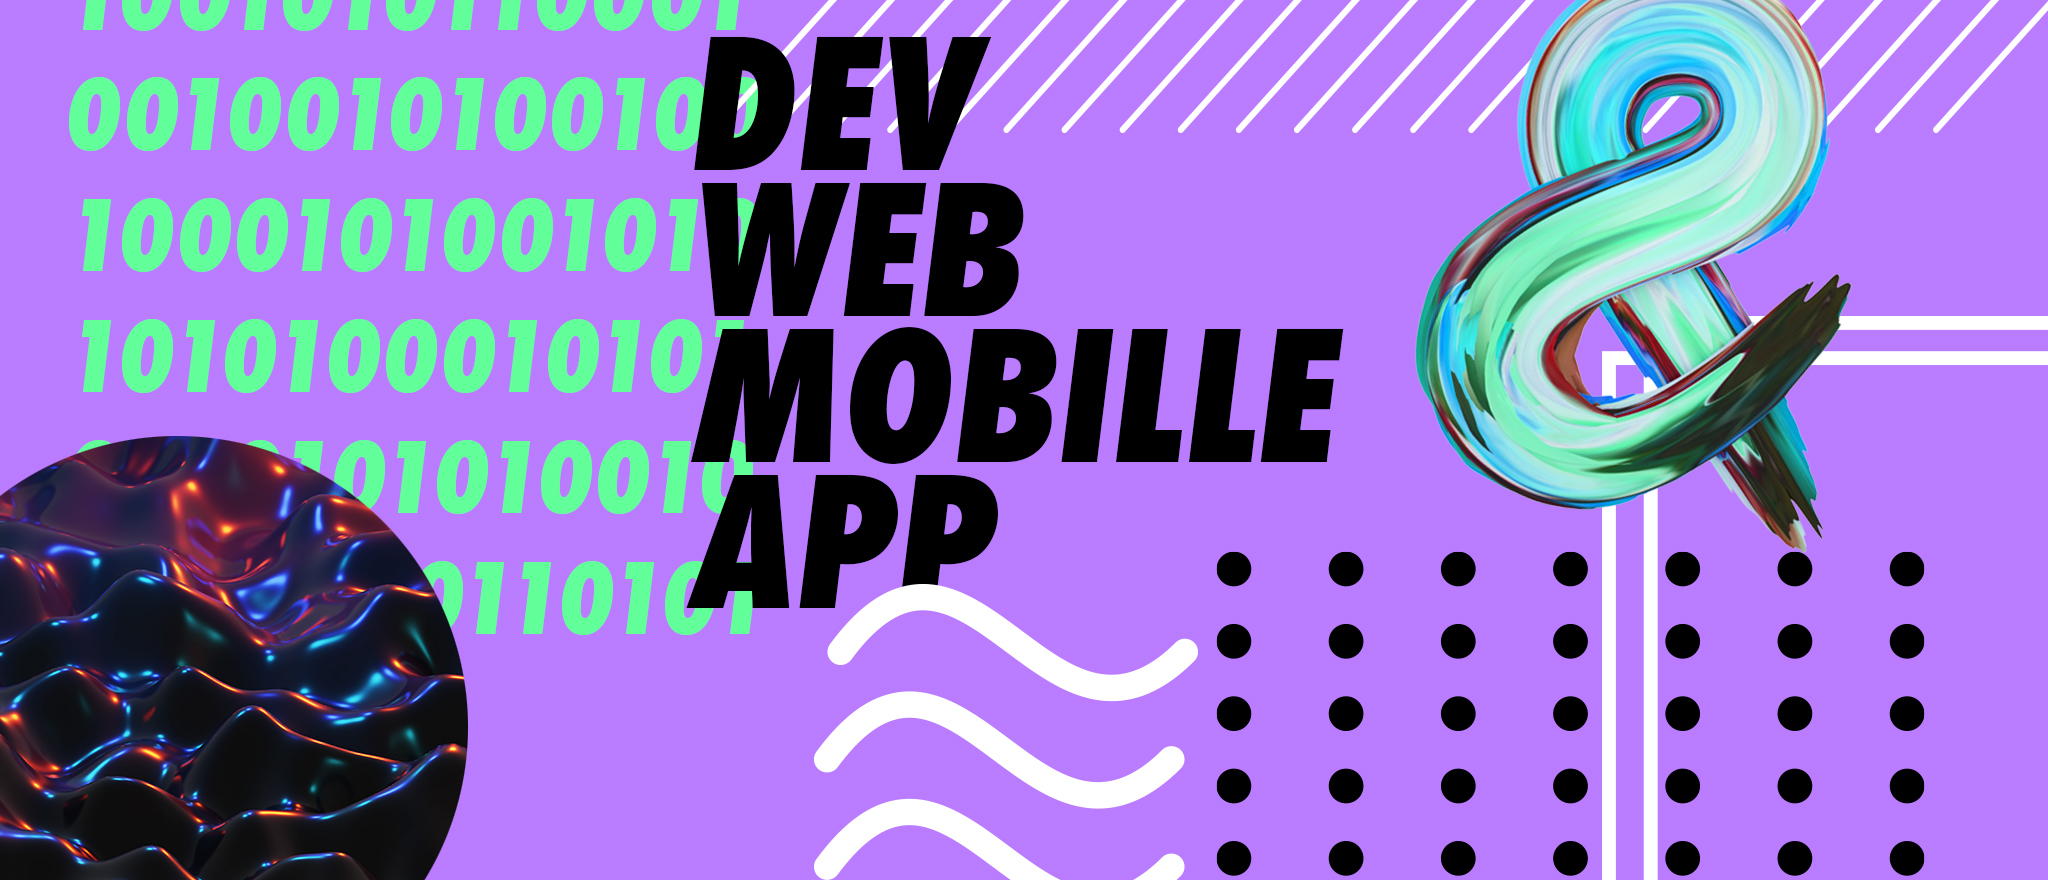 fond background developpement web et mobile